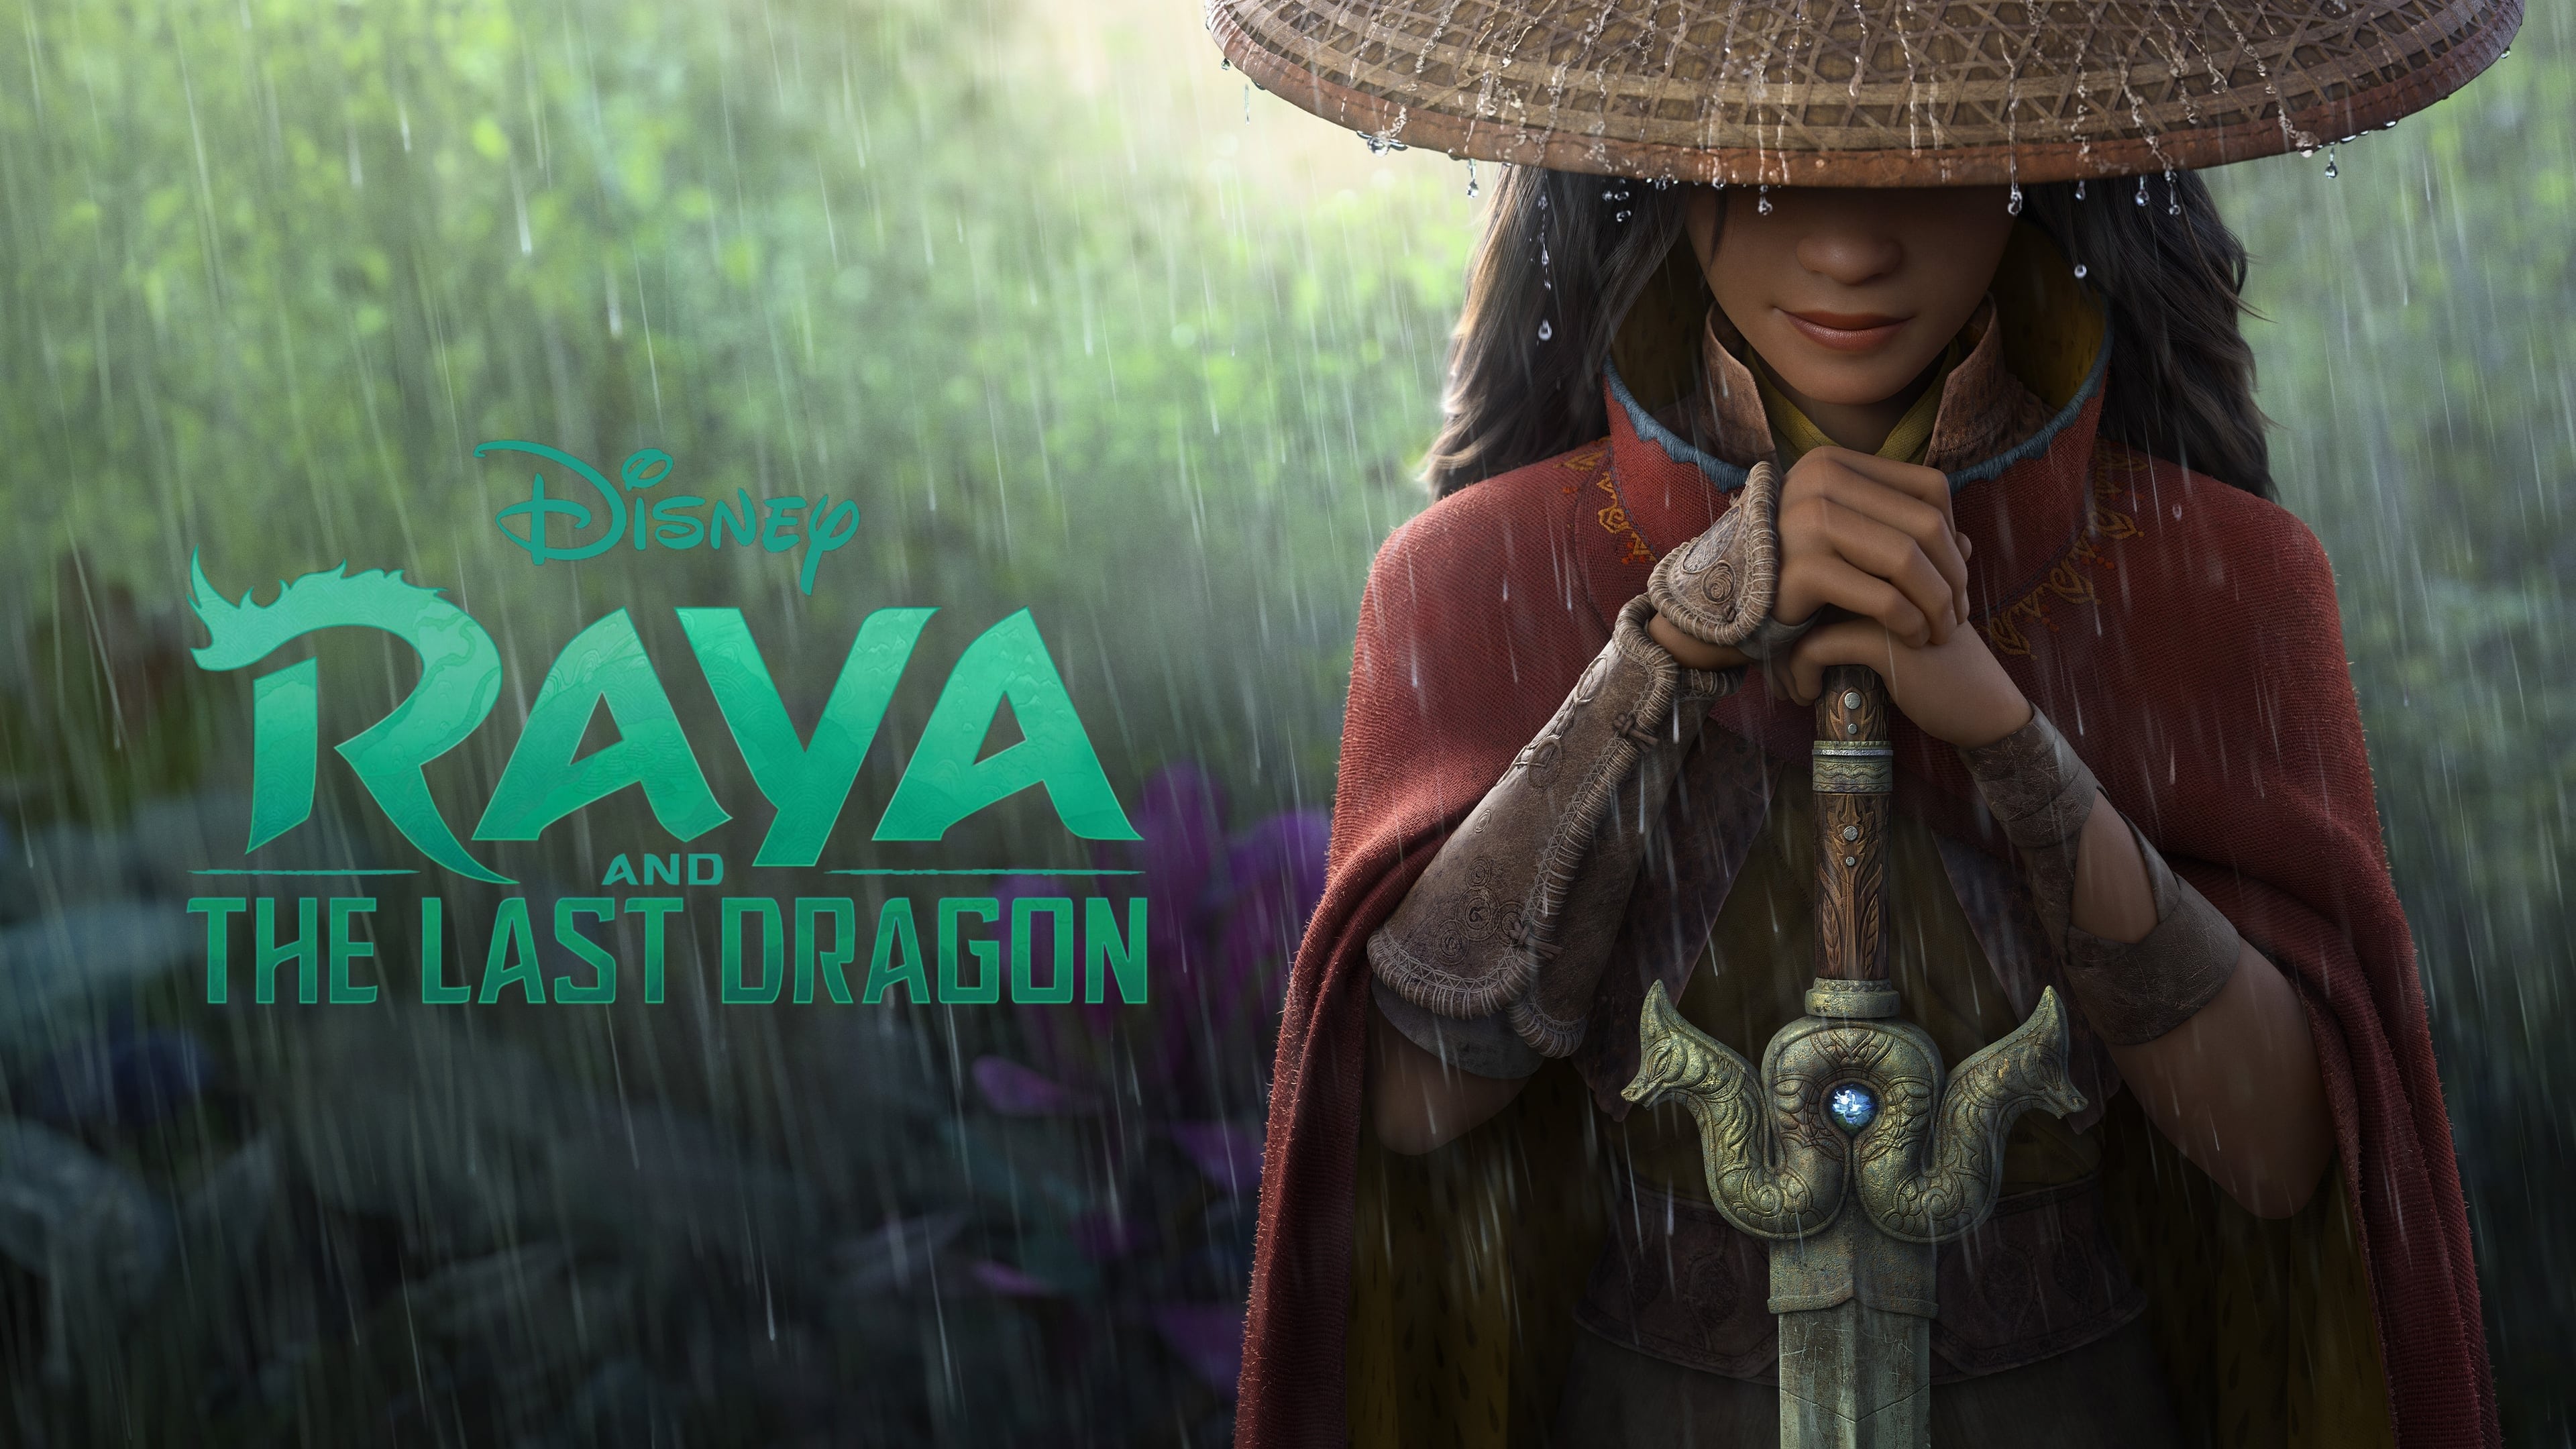 Raya and the Last Dragon (2021) 4K Movie Online Full